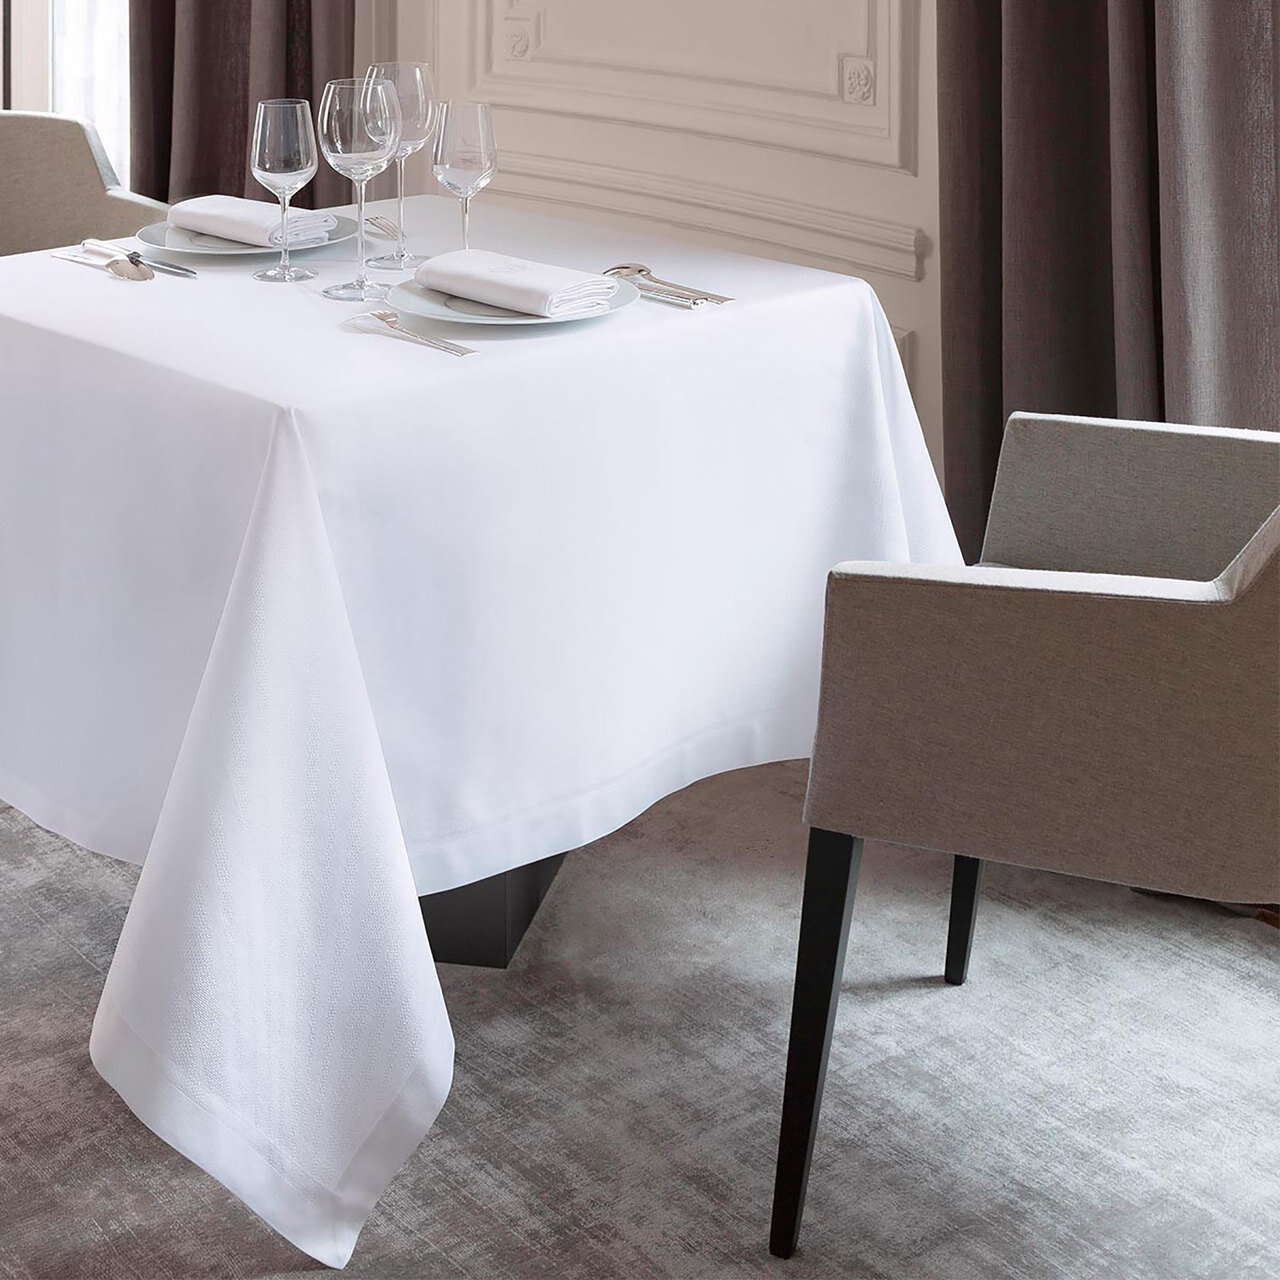 Le Jacquard Offre White Tiret Tablecloth 69x98